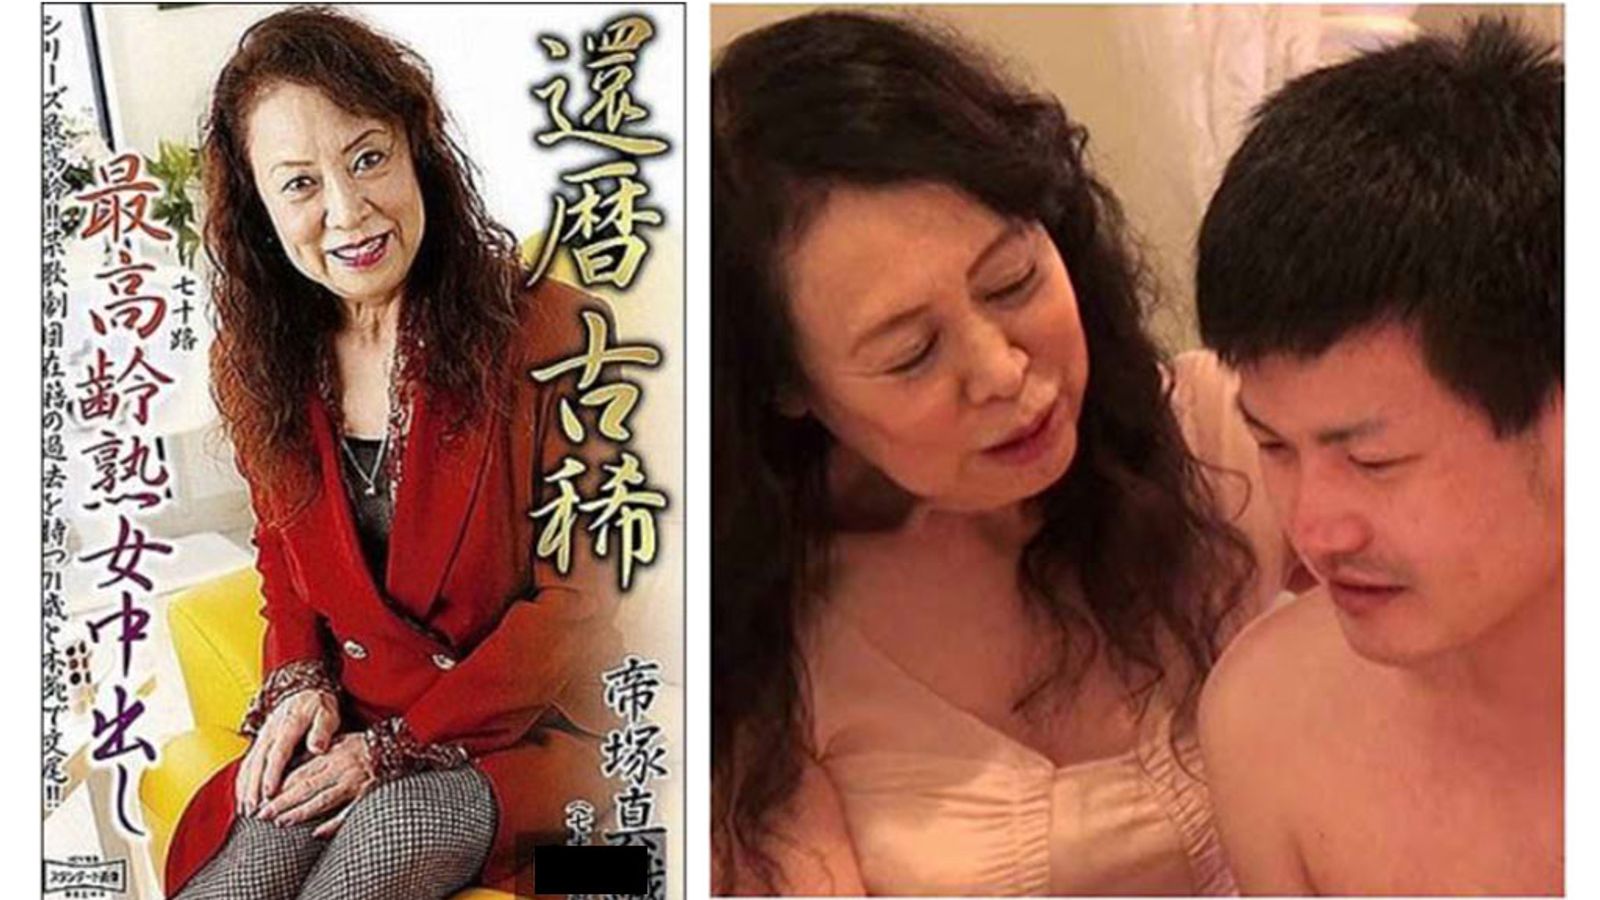 Oldest Porn Star - Japan's (And Perhaps The World's) Oldest Porn Star Retires | AVN